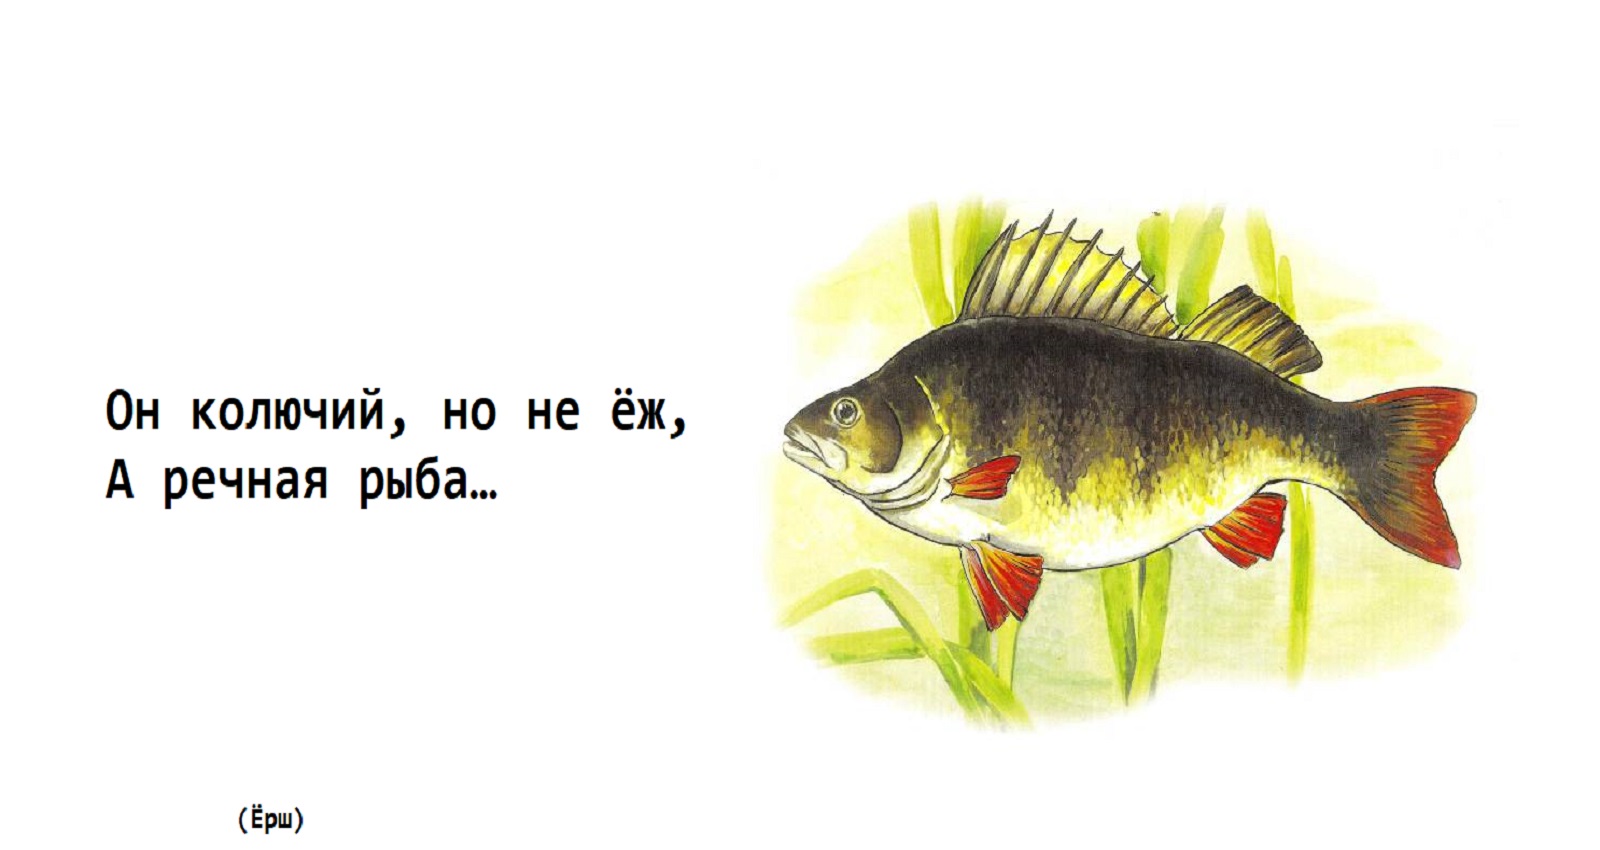 Загадка про рыбу Ерш